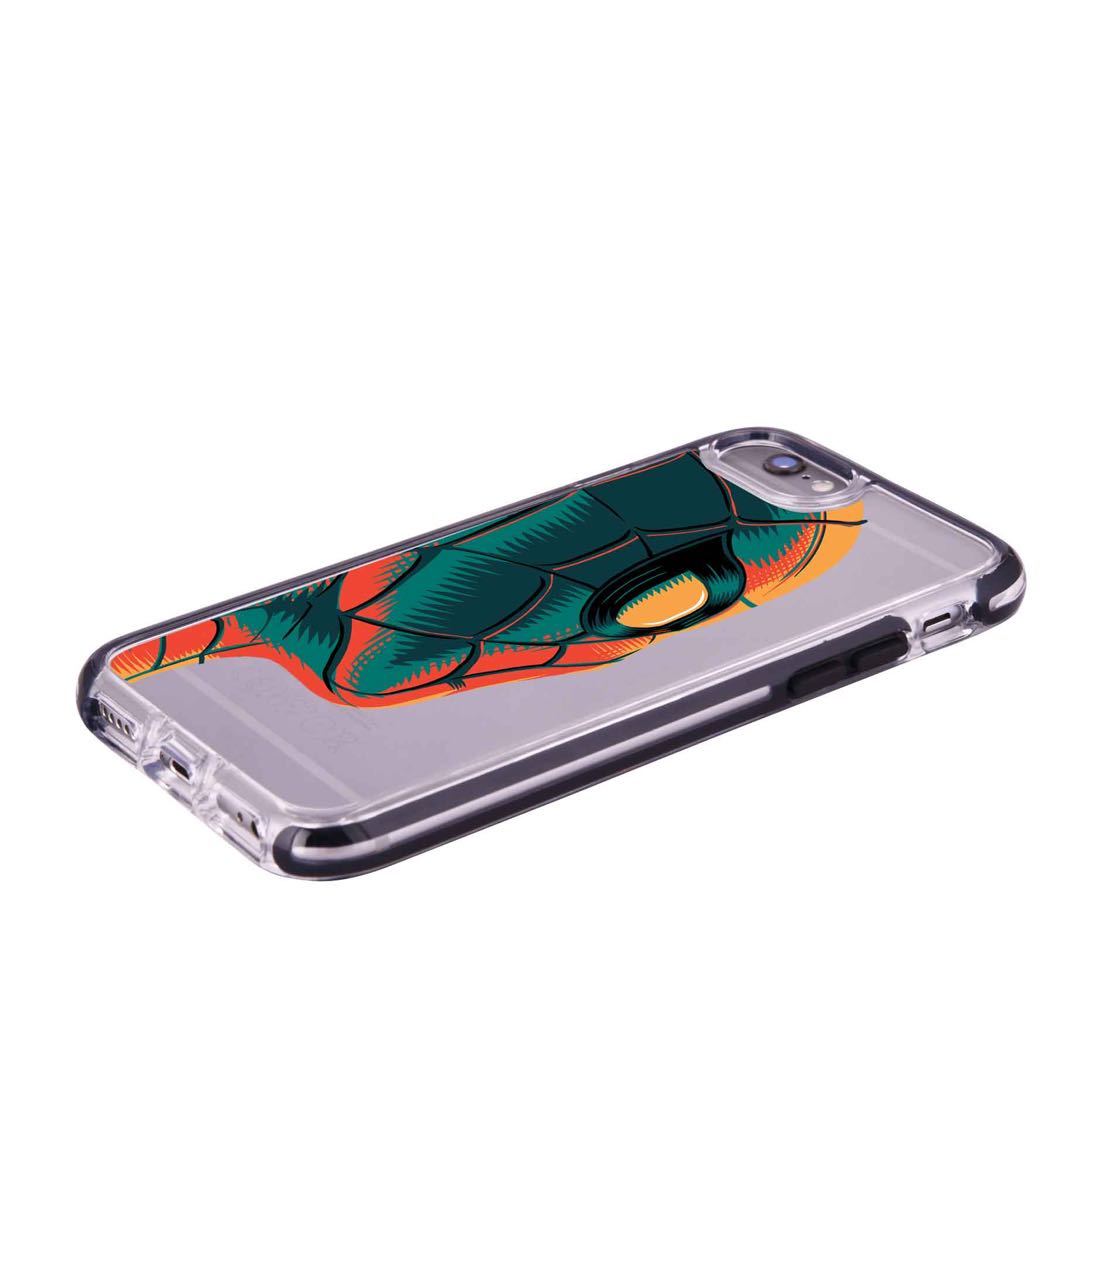 Illuminated Spiderman - Extreme Phone Case for iPhone 6S